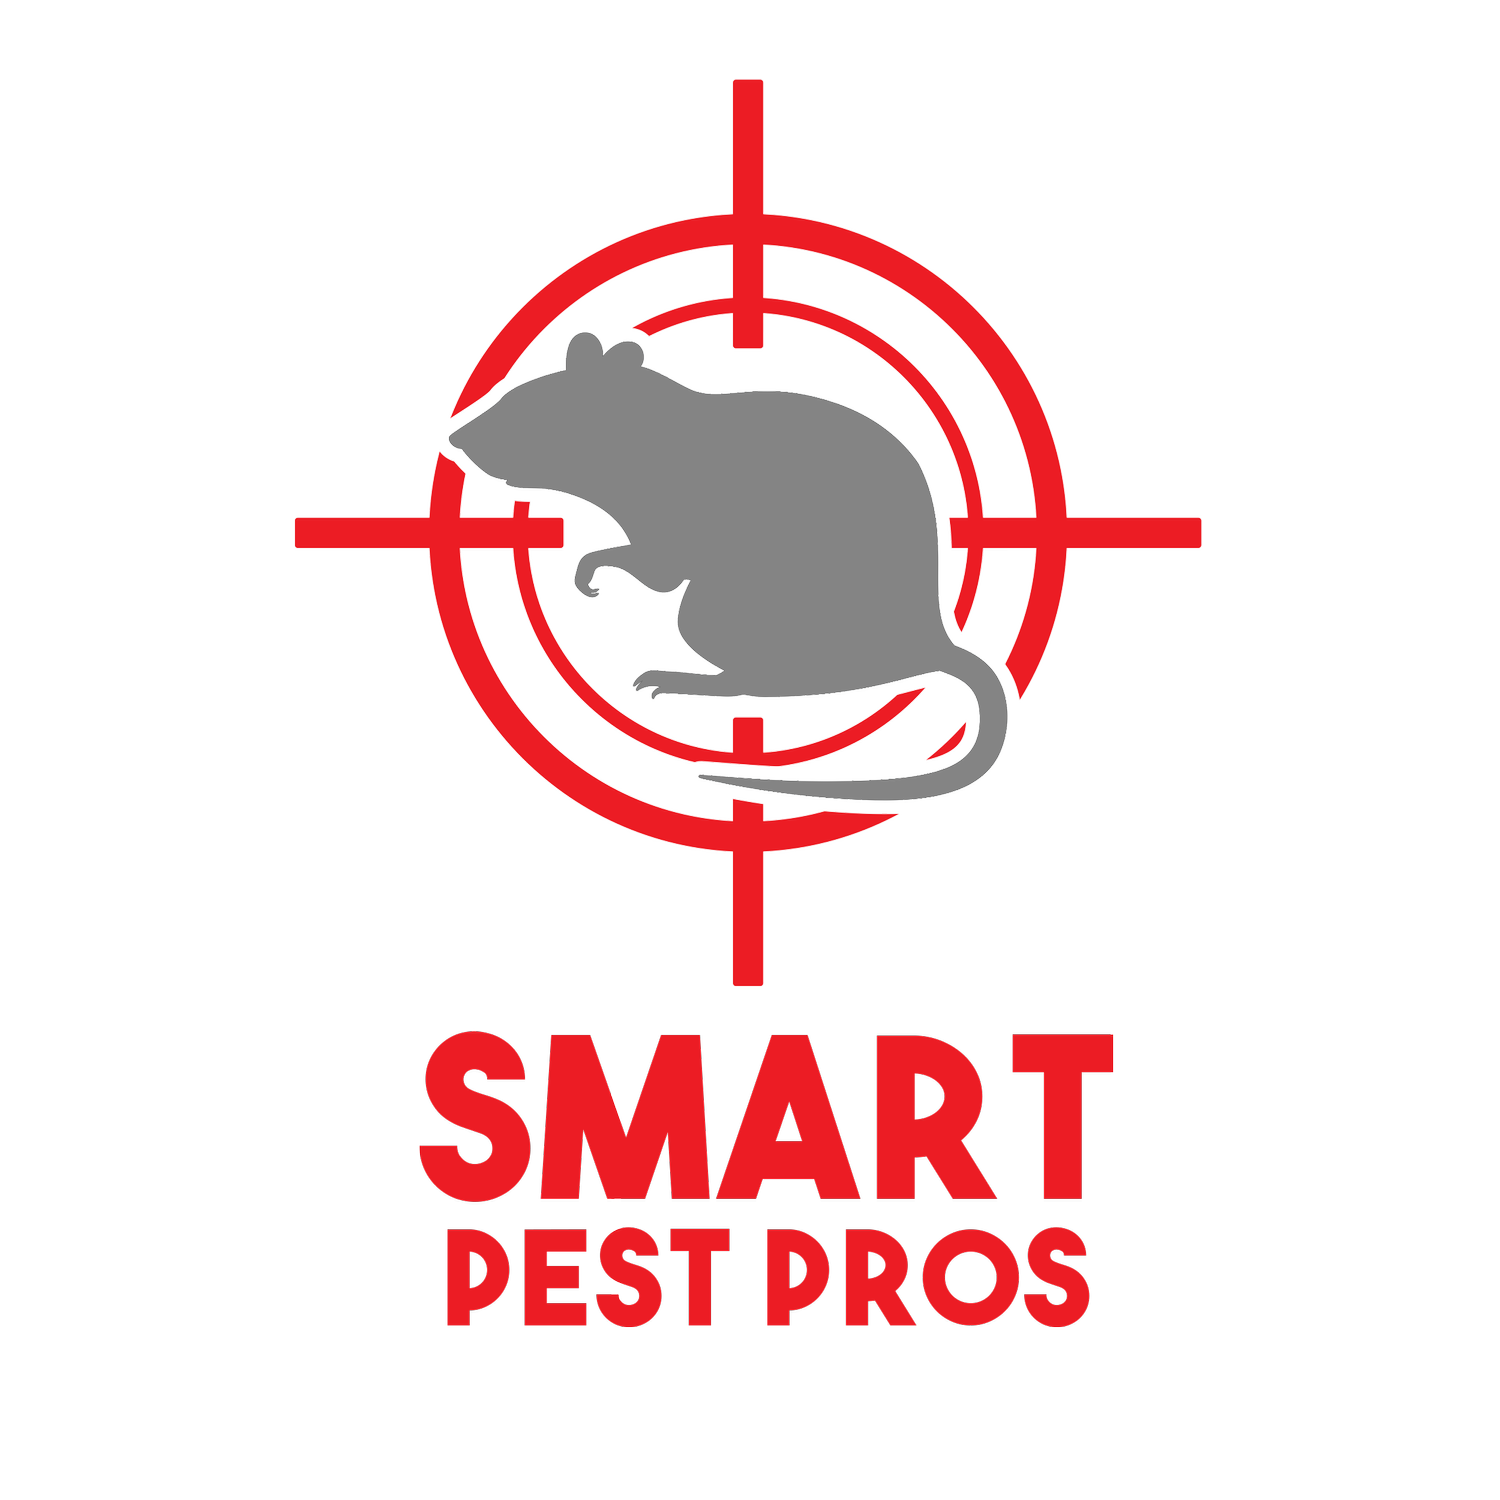 Smart Pest Pros